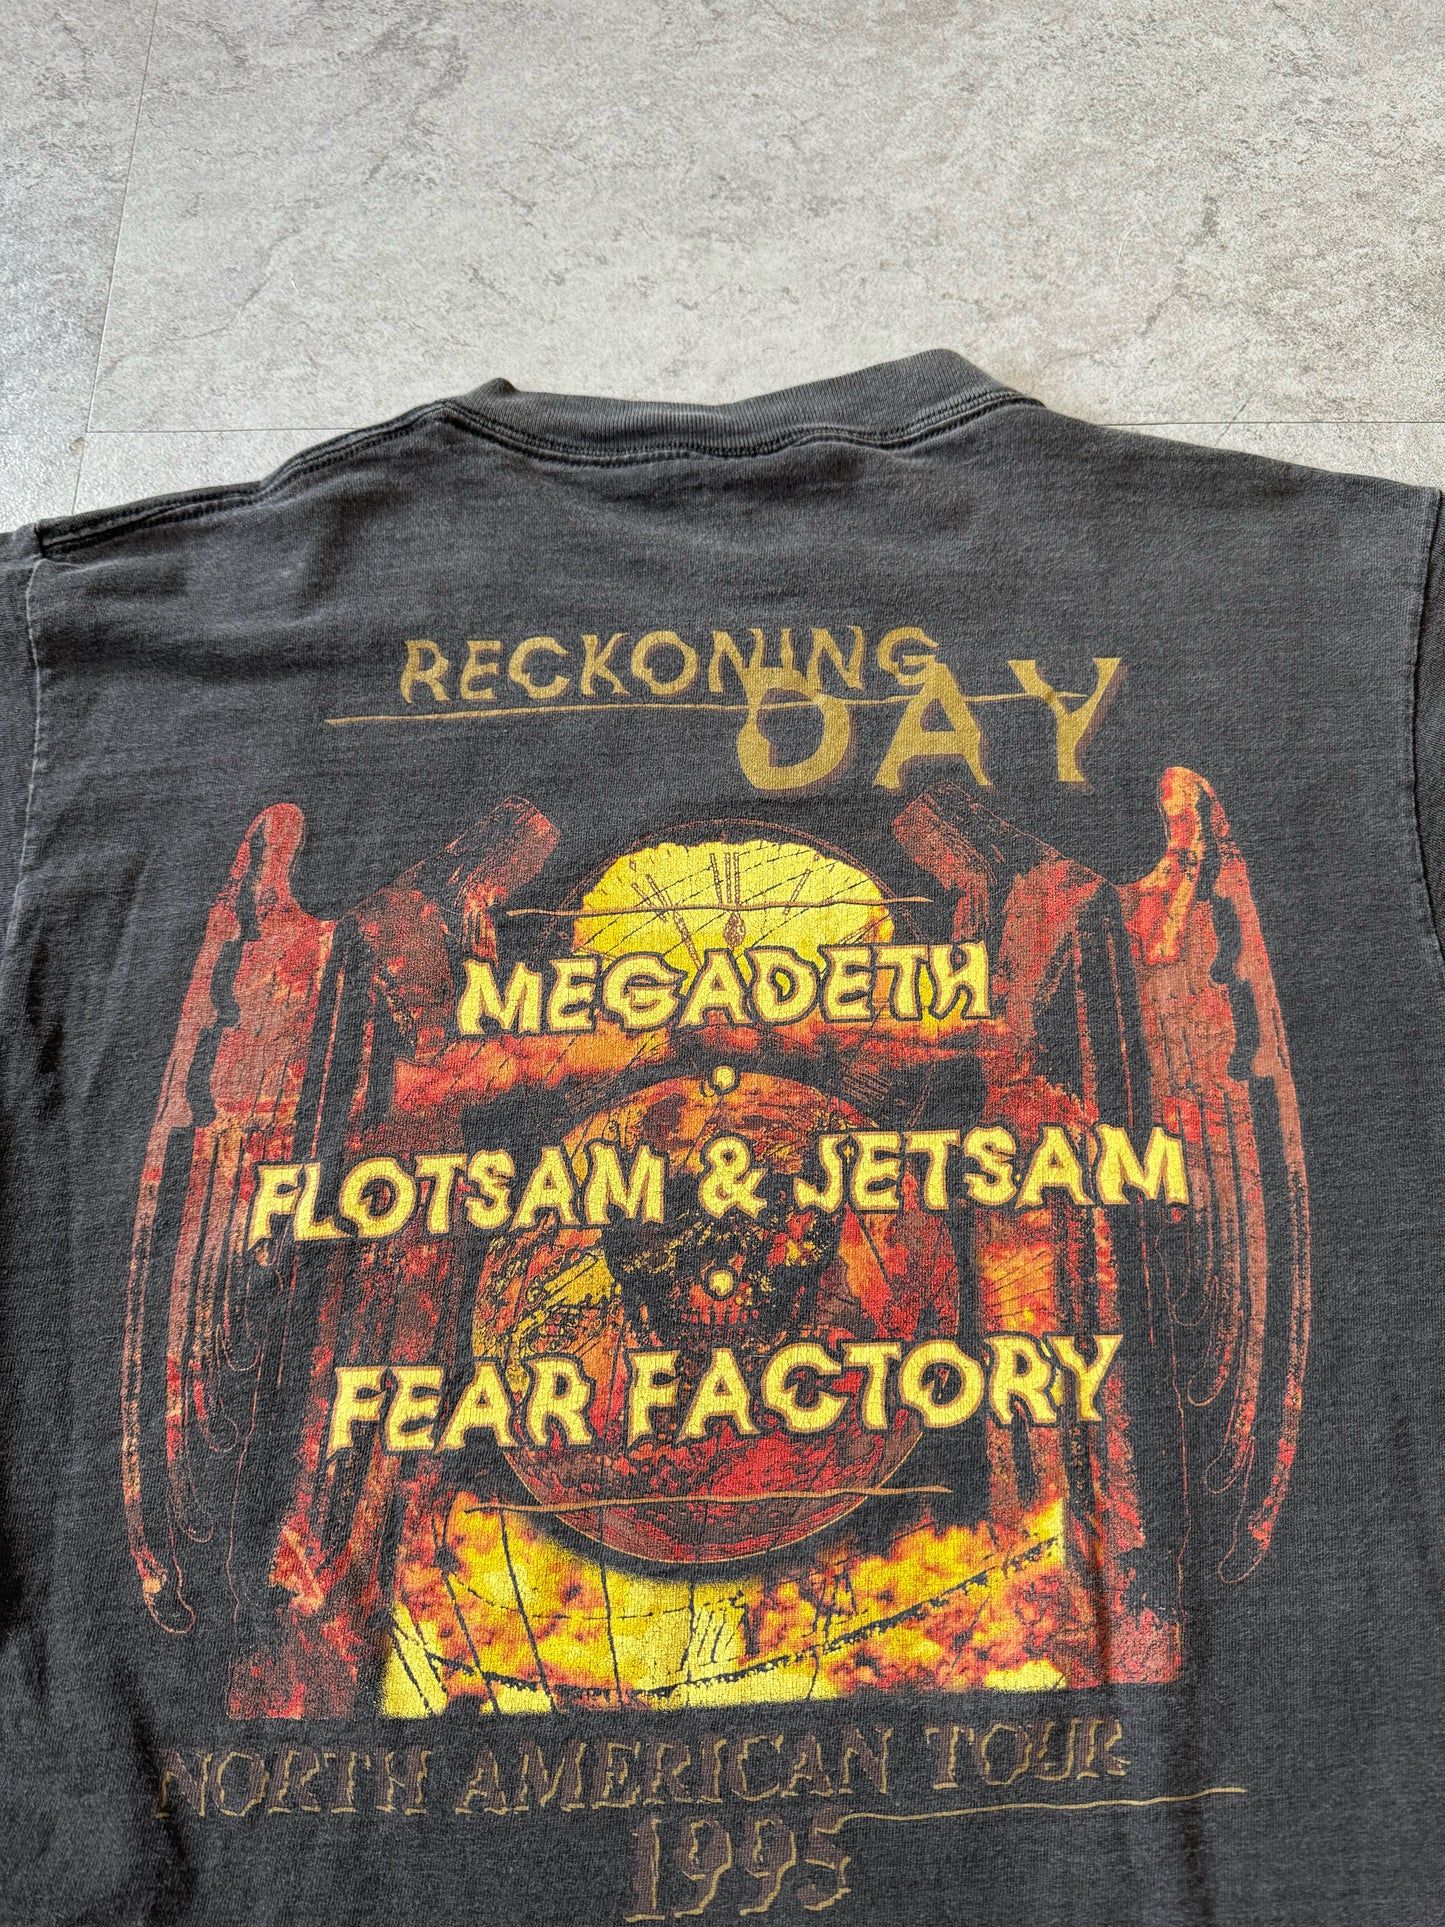 (L) 1995 Vintage Megadeth “Reckoning Day” Tour Tee